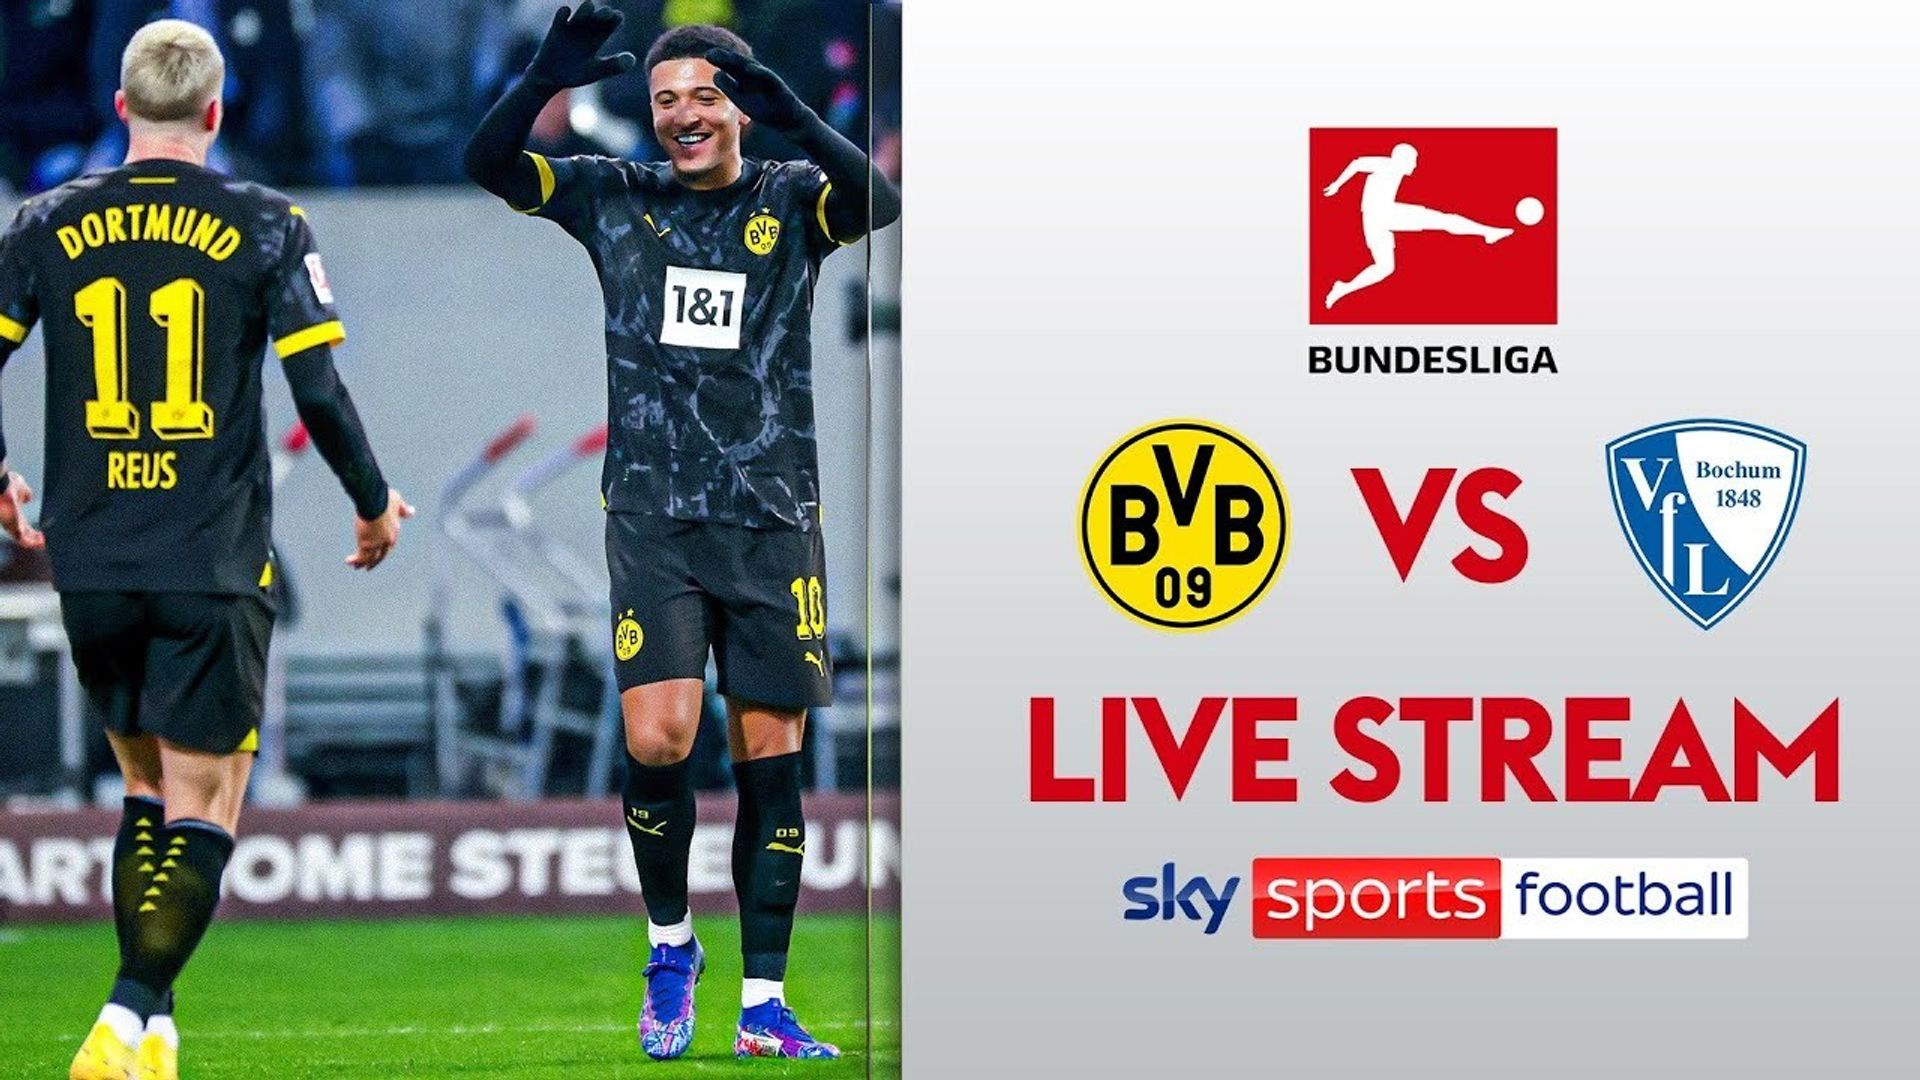 FREE STREAM: Watch Borussia Dortmund vs Bochum at 4.30pm